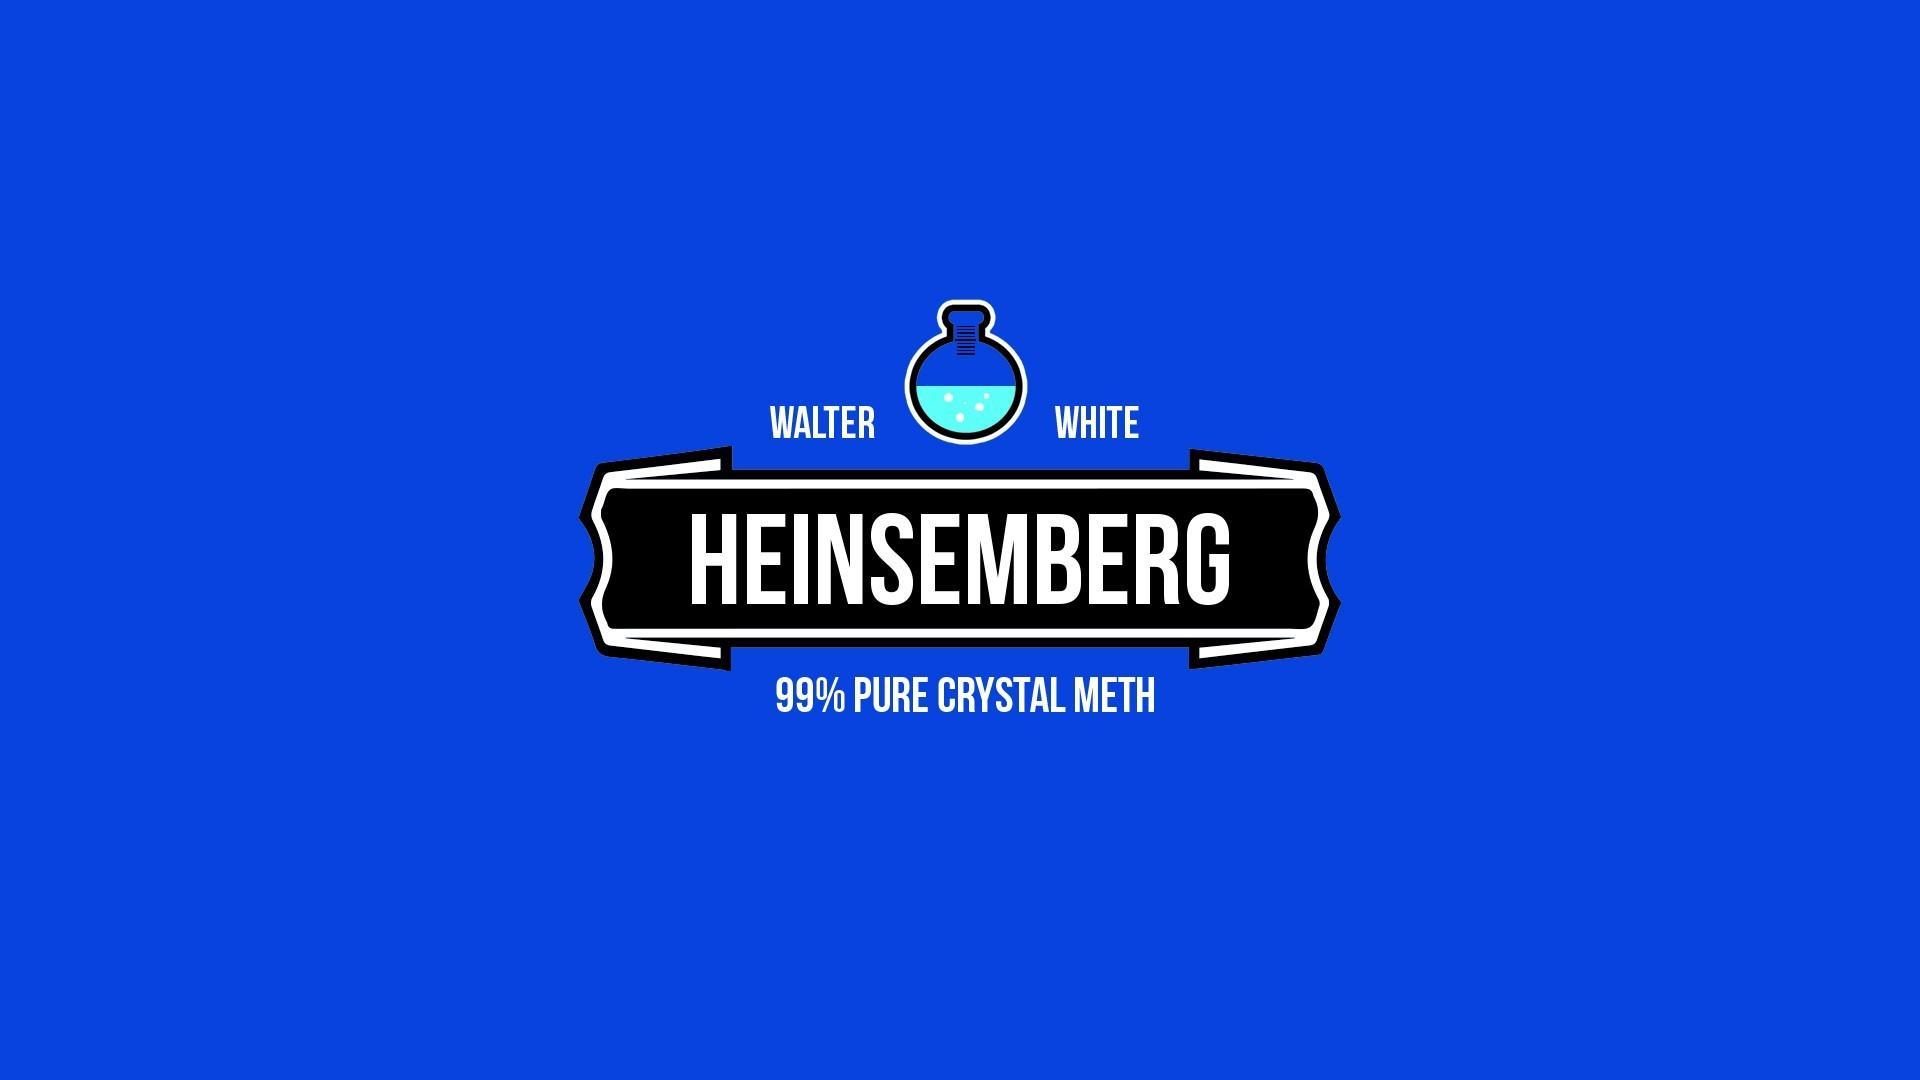 Breaking Bad Heisenberg Wallpaper For Iphone For Widescreen